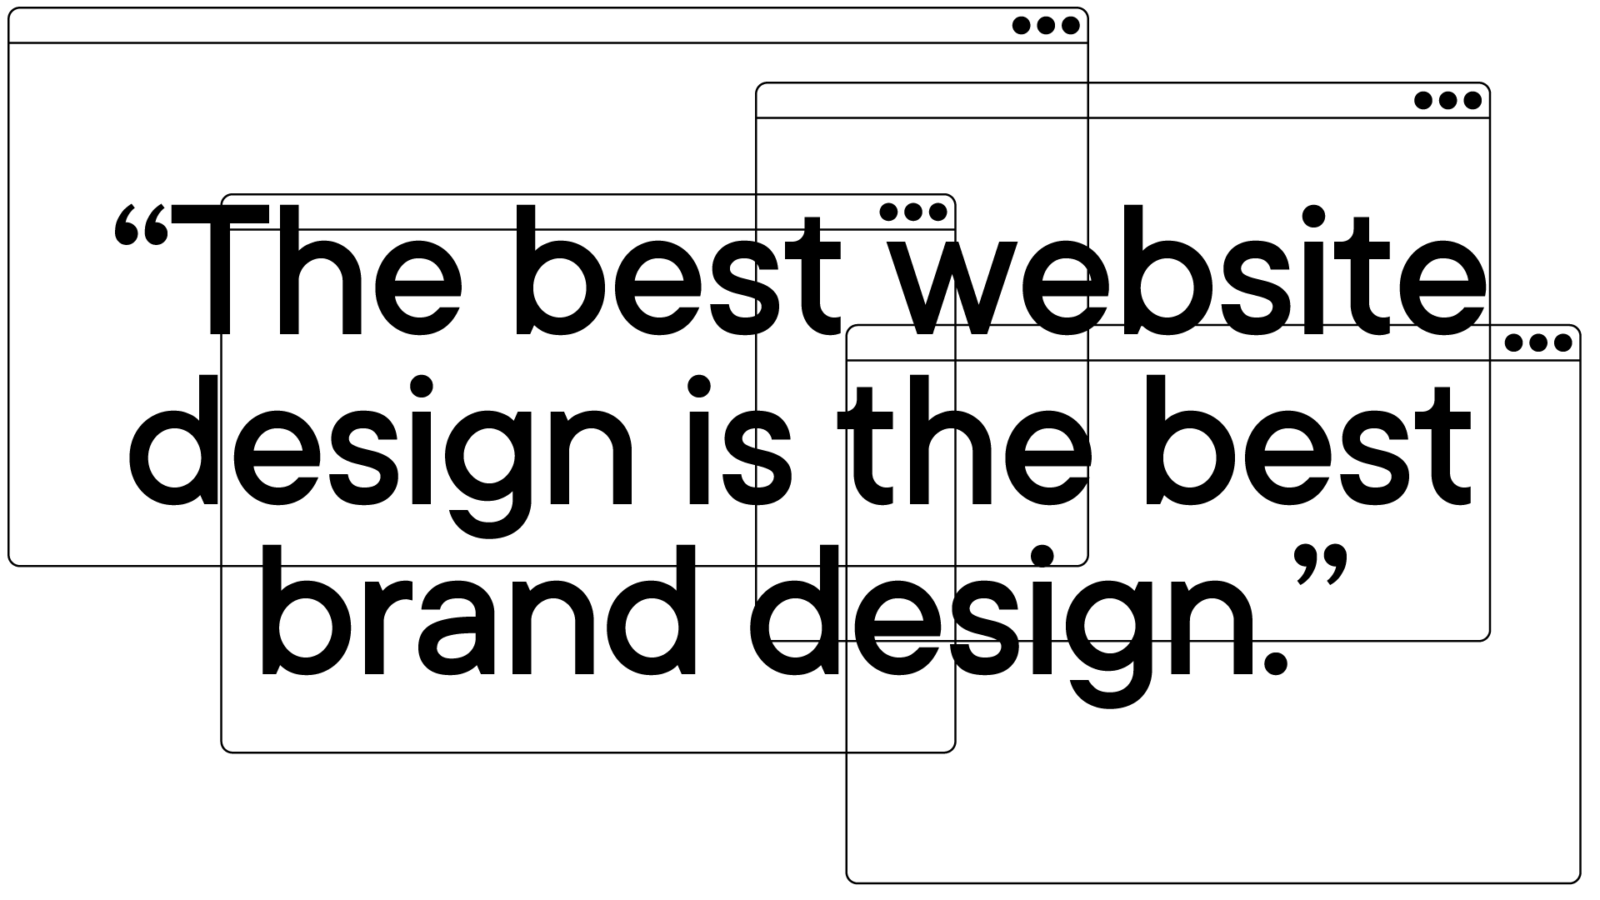 Who Should Design Your Website?